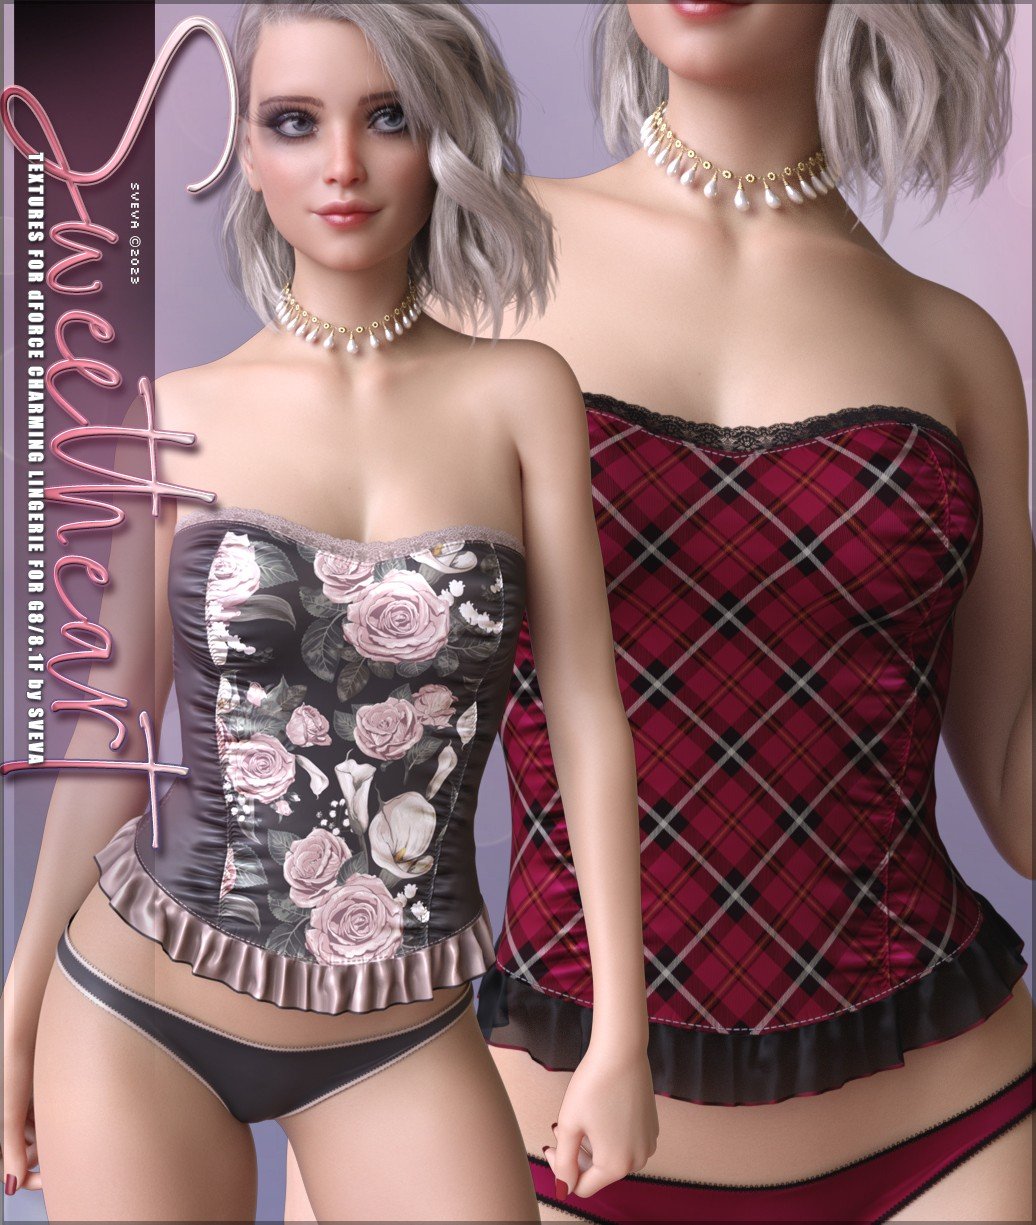 Sweetheart Textures for dForce Charming Lingerie II by: Sveva, 3D Models by Daz 3D